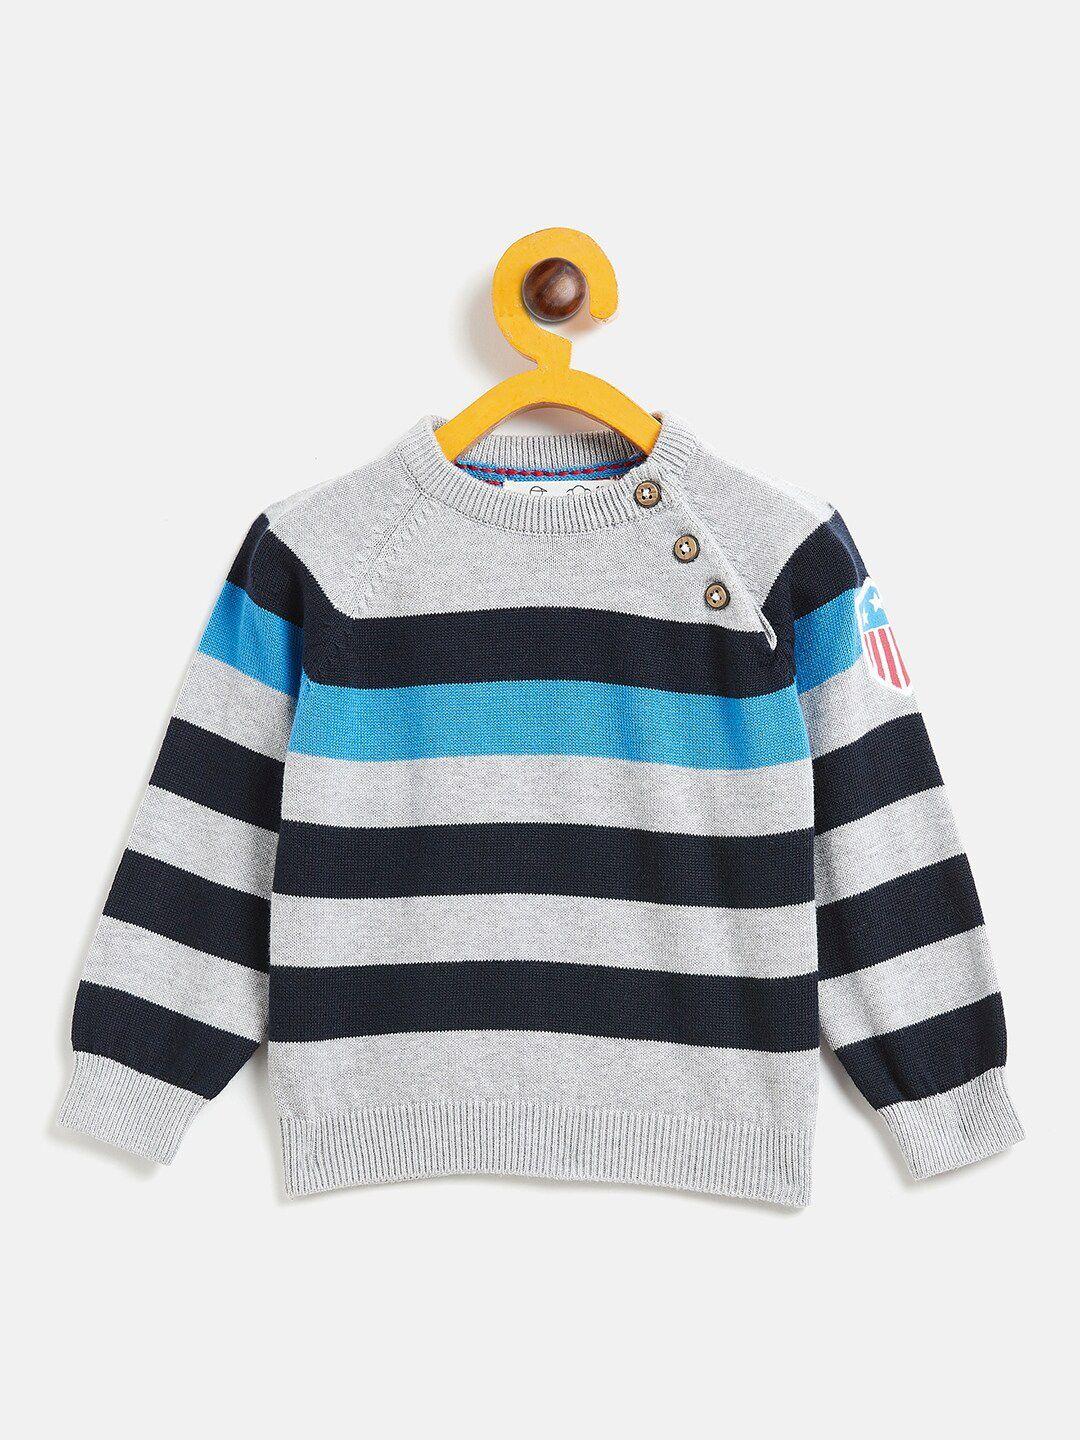 jwaaq unisex kids grey melange & blue striped pullover